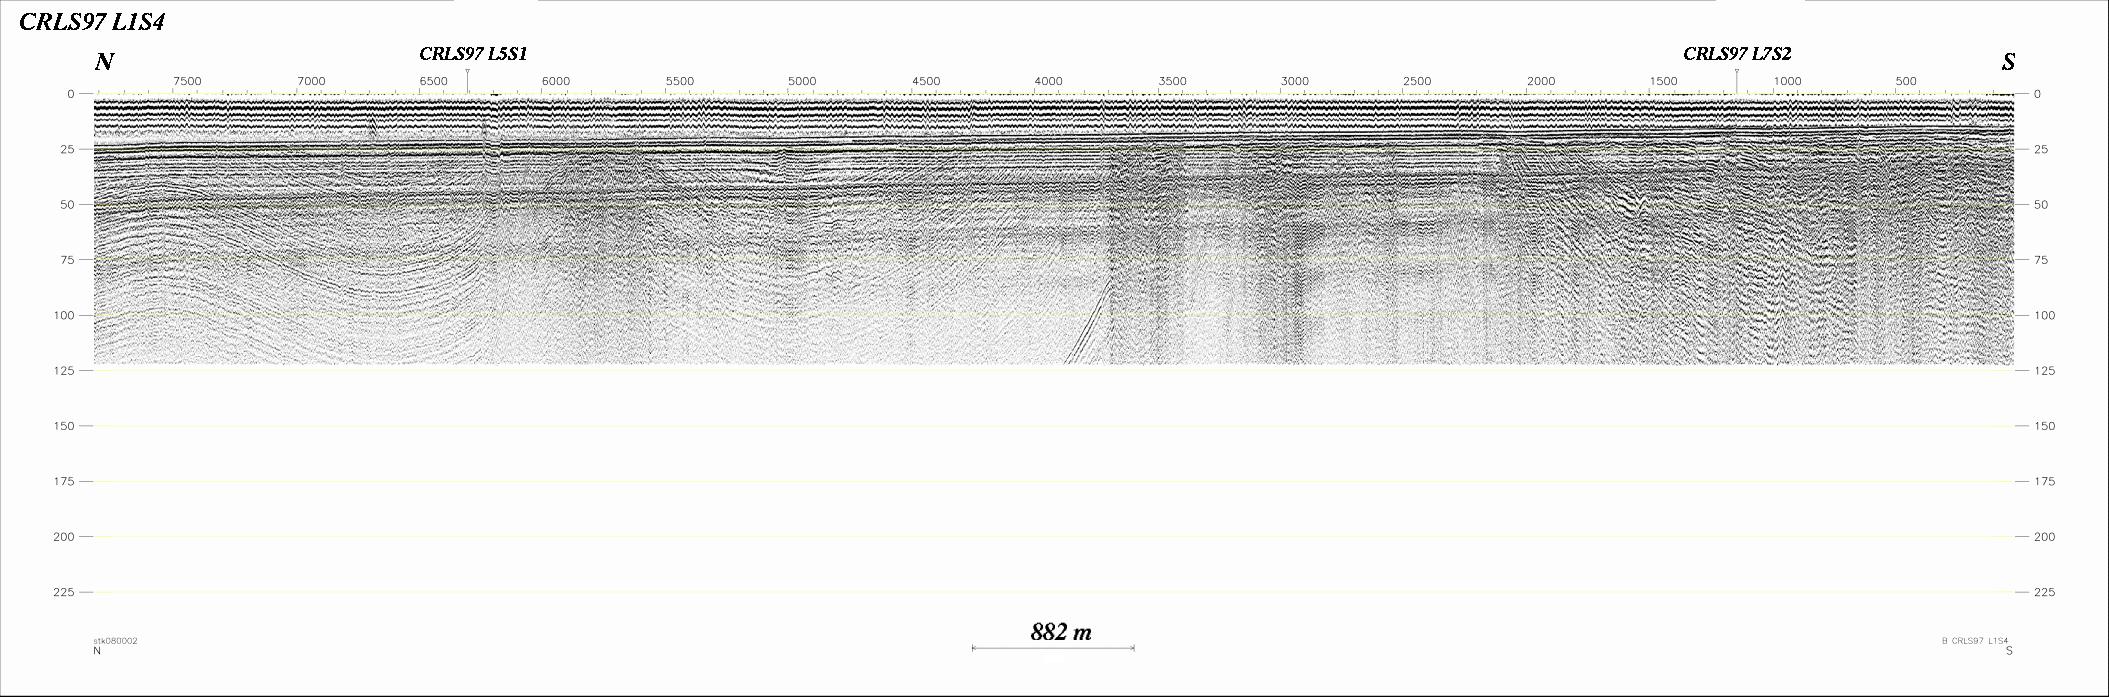 Seismic Reflection Profile Line No.: L1s4 (277028 bytes)